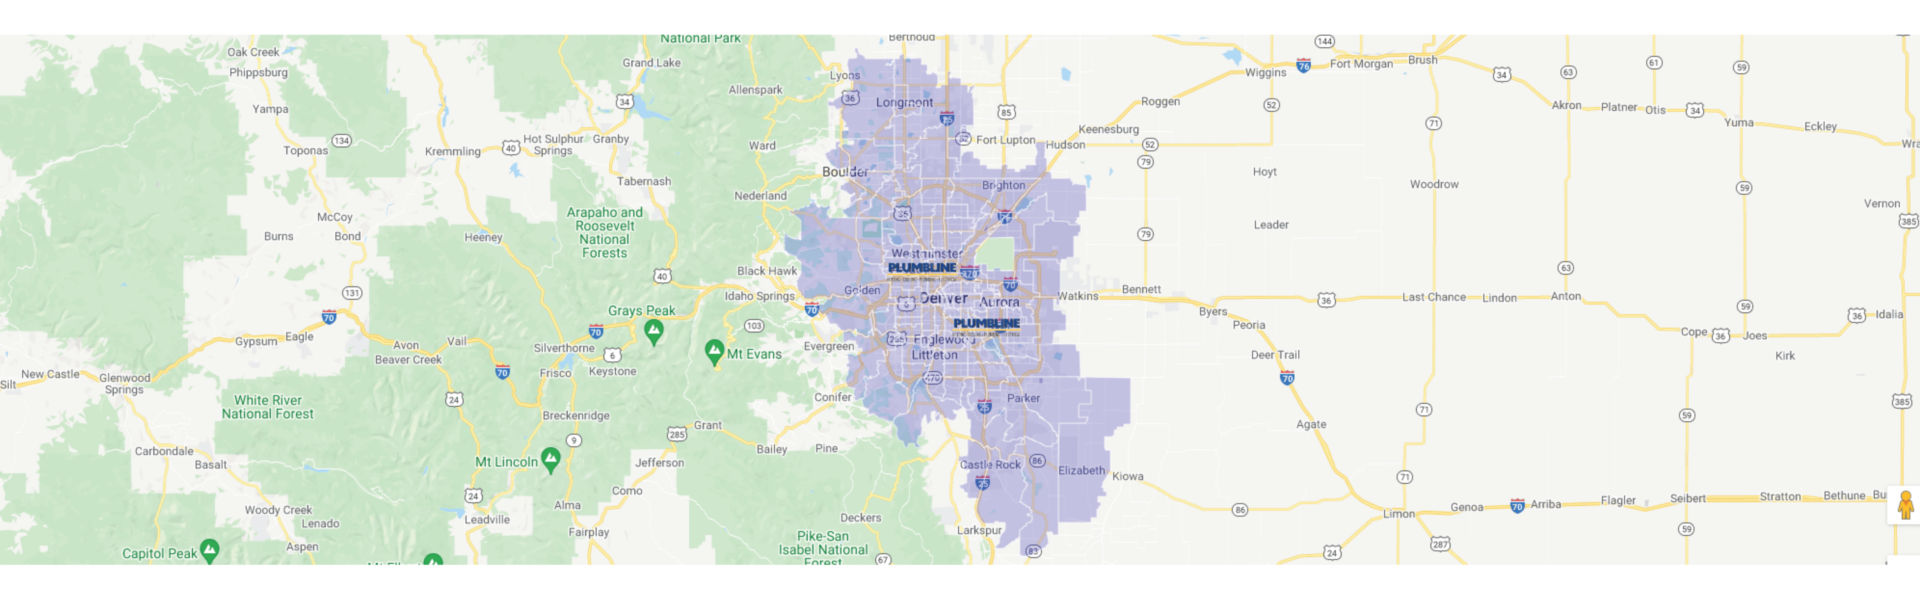 Plumbline service location map